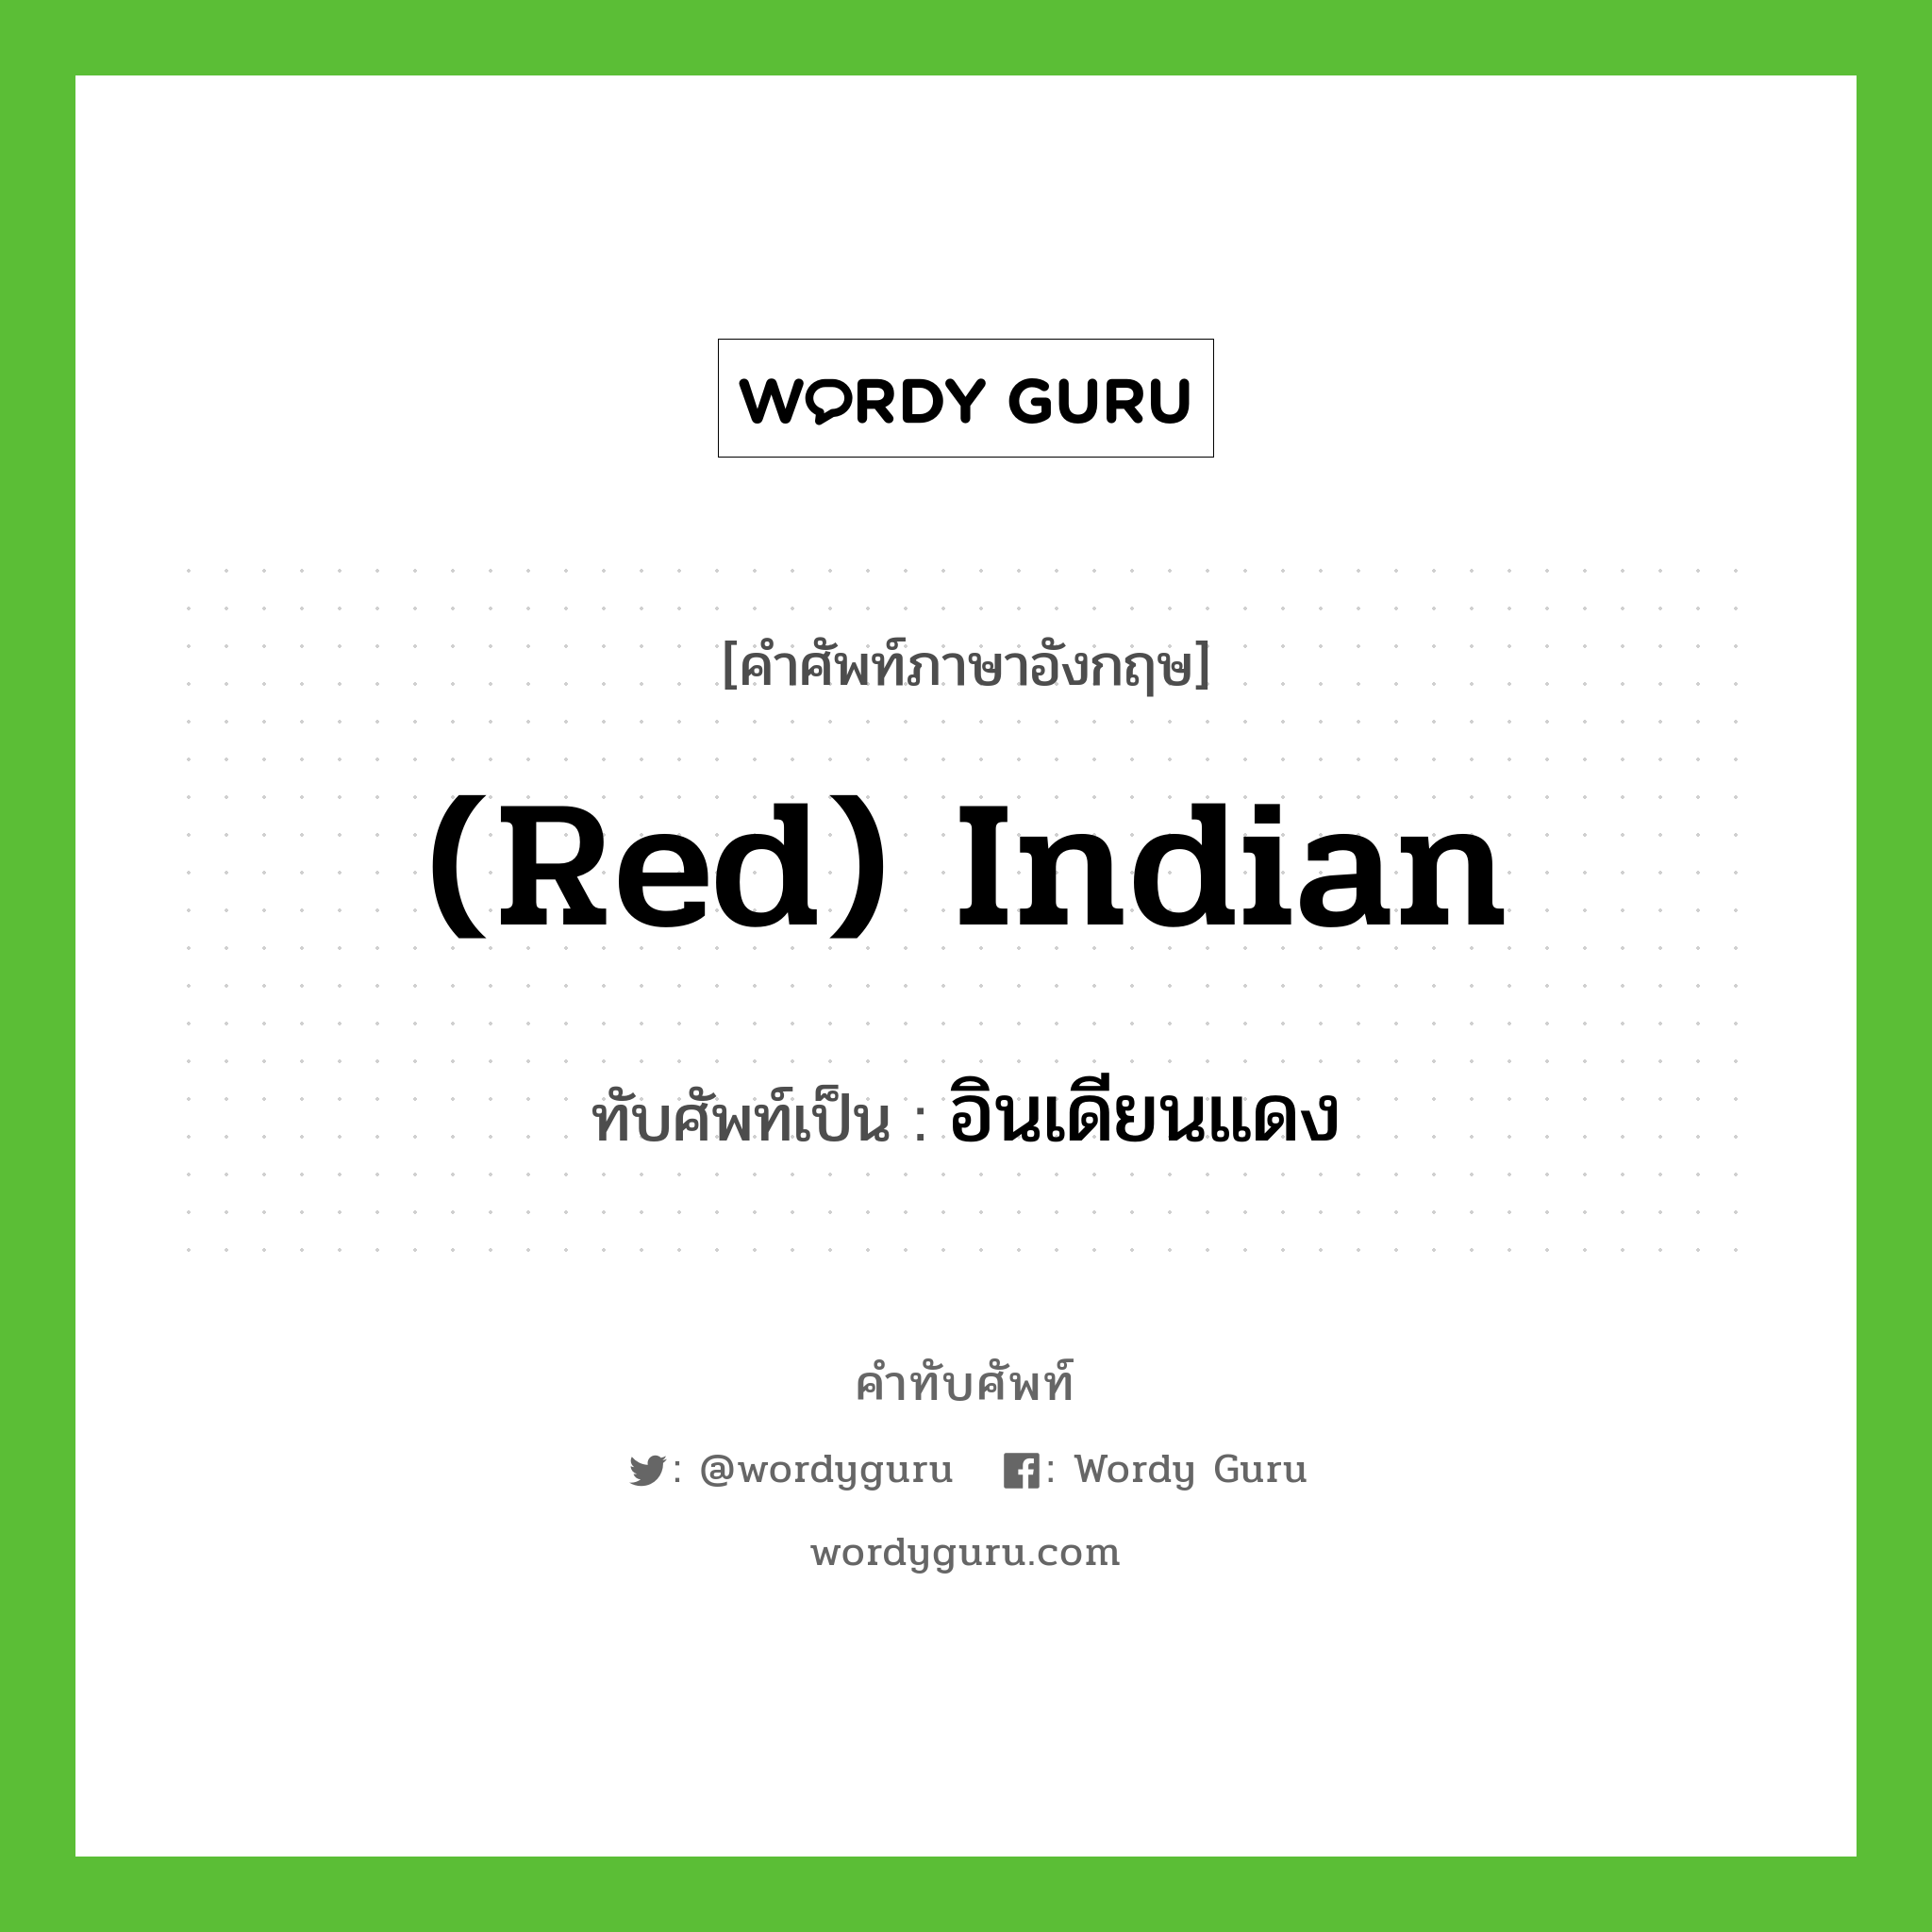 (Red) Indian เขียนเป็นคำไทยว่าอะไร?, คำศัพท์ภาษาอังกฤษ (Red) Indian ทับศัพท์เป็น อินเดียนแดง